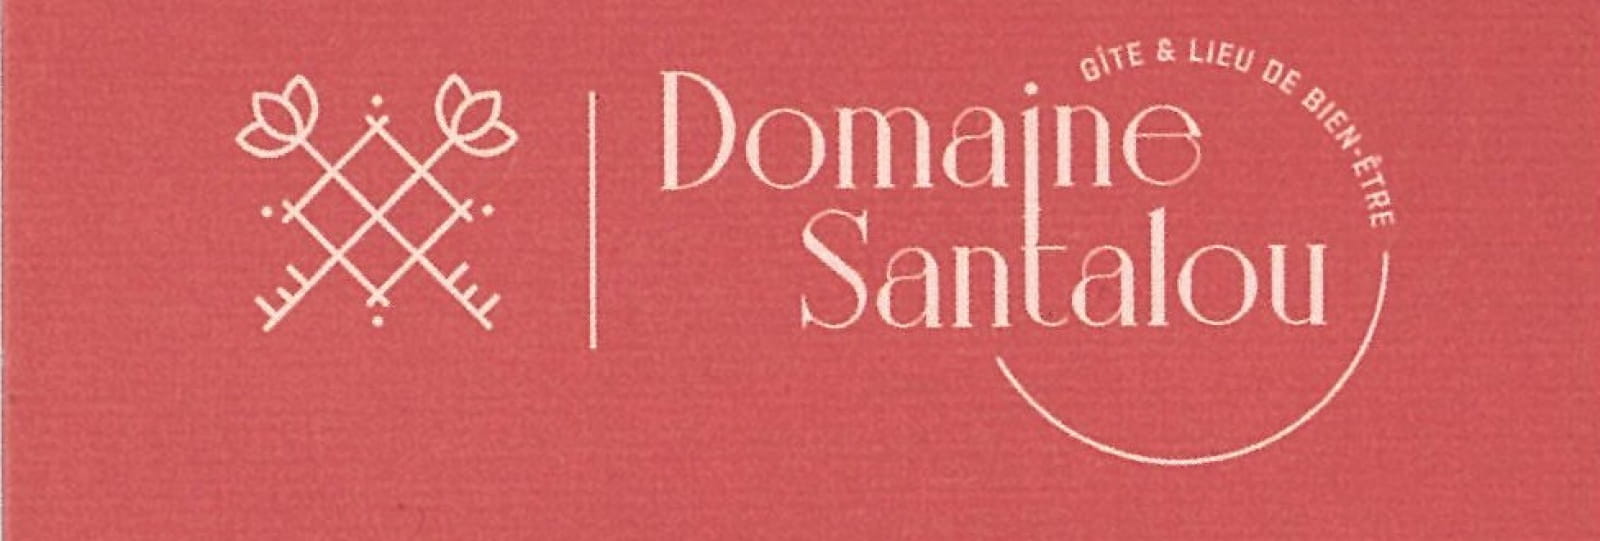 Domaine Santalou